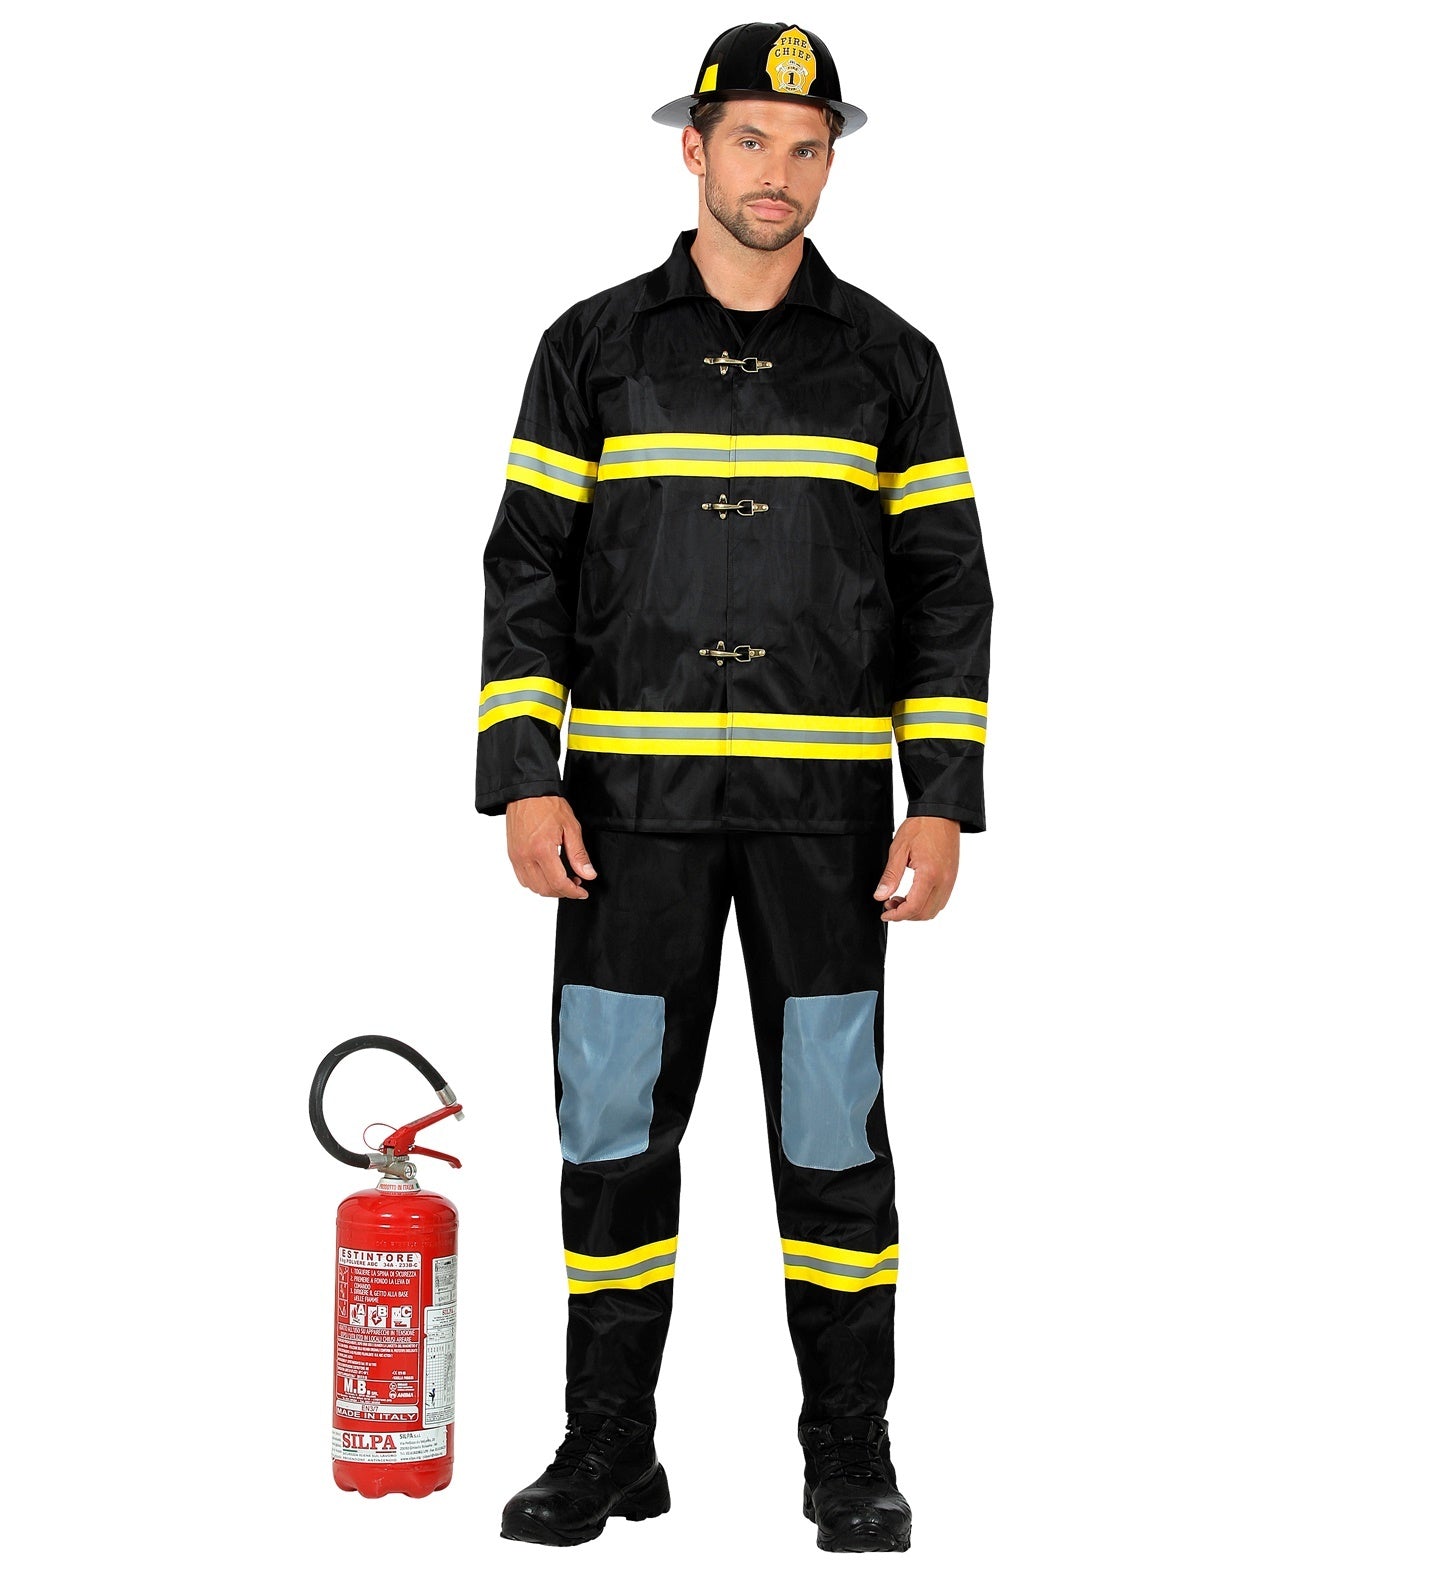 Widmann - Brandweer Kostuum - Vuurbestrijdende Levensredder Brandweerman Kostuum - geel,zwart - XL - Carnavalskleding - Verkleedkleding